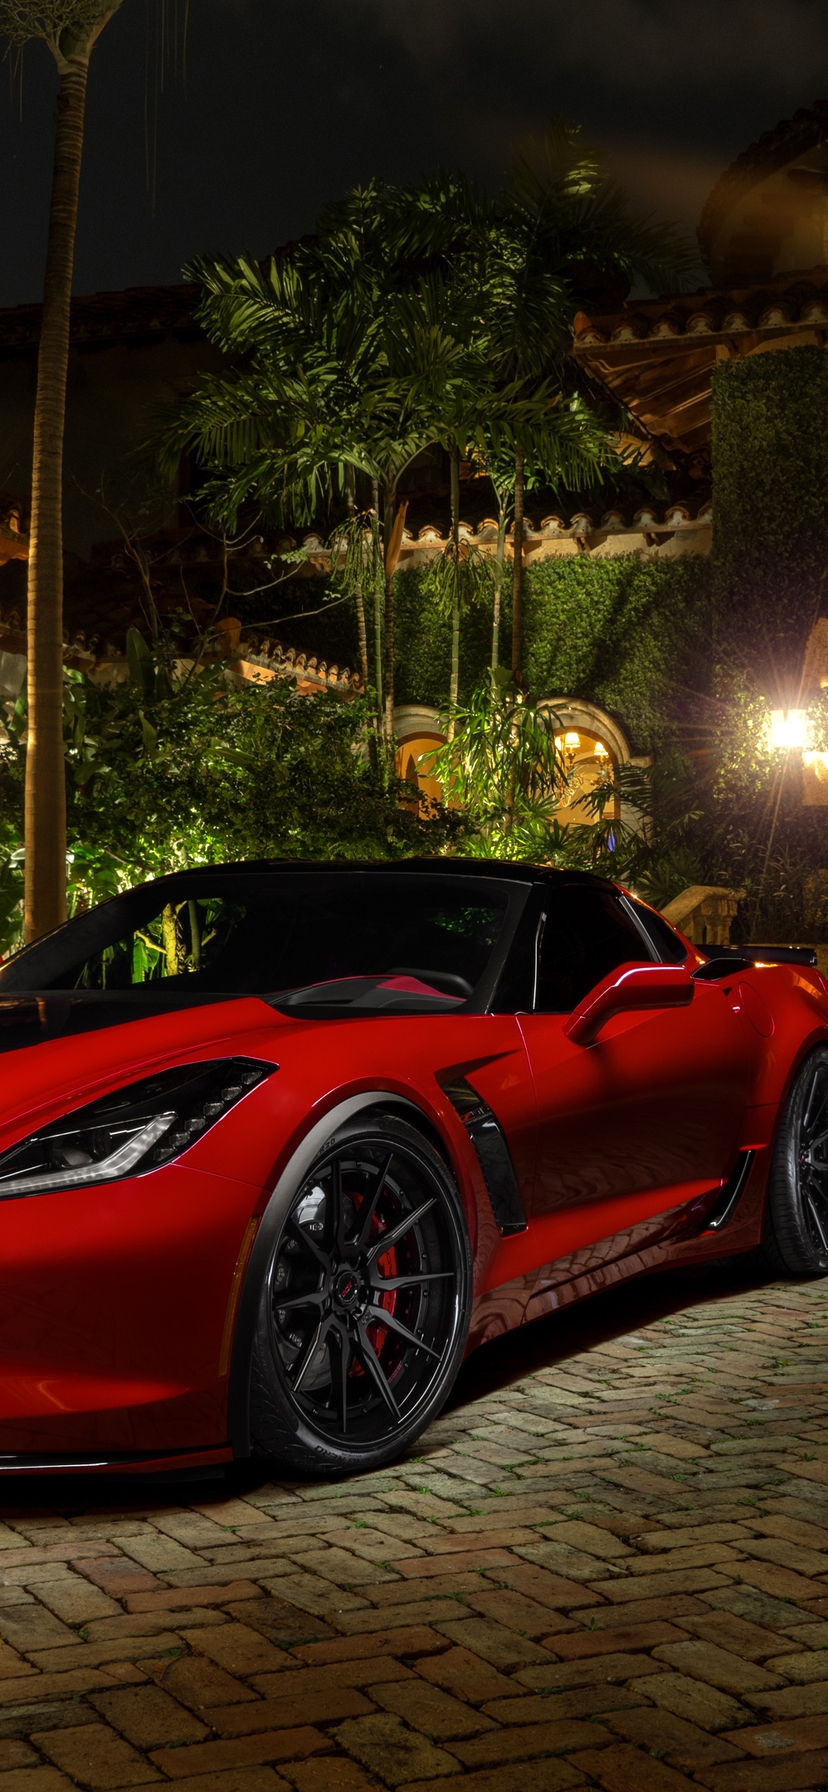 Image: Chevrolet, Corvette, red, night, lights, building